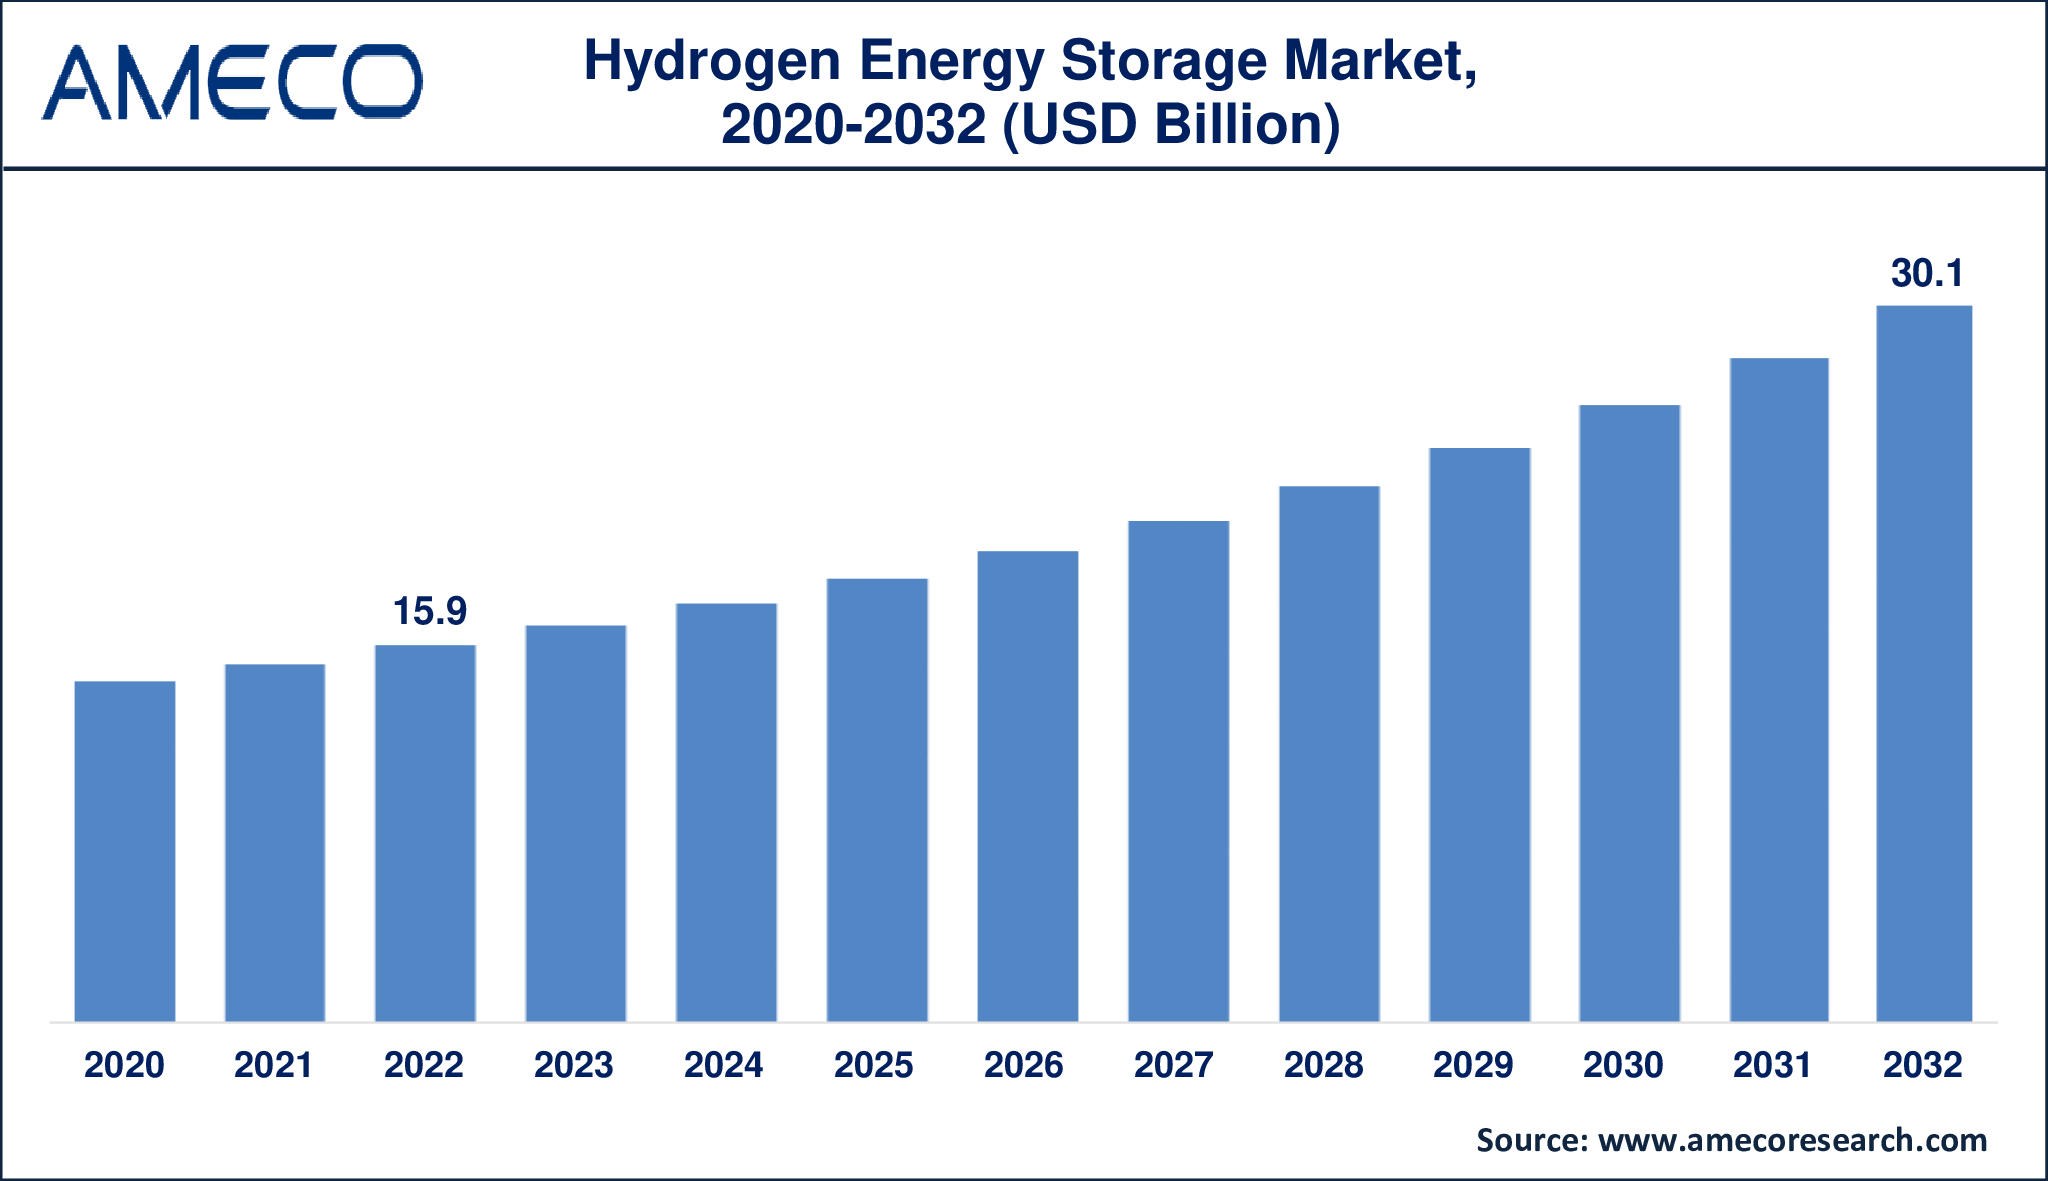 Hydrogen Energy Storage Market Dynamics